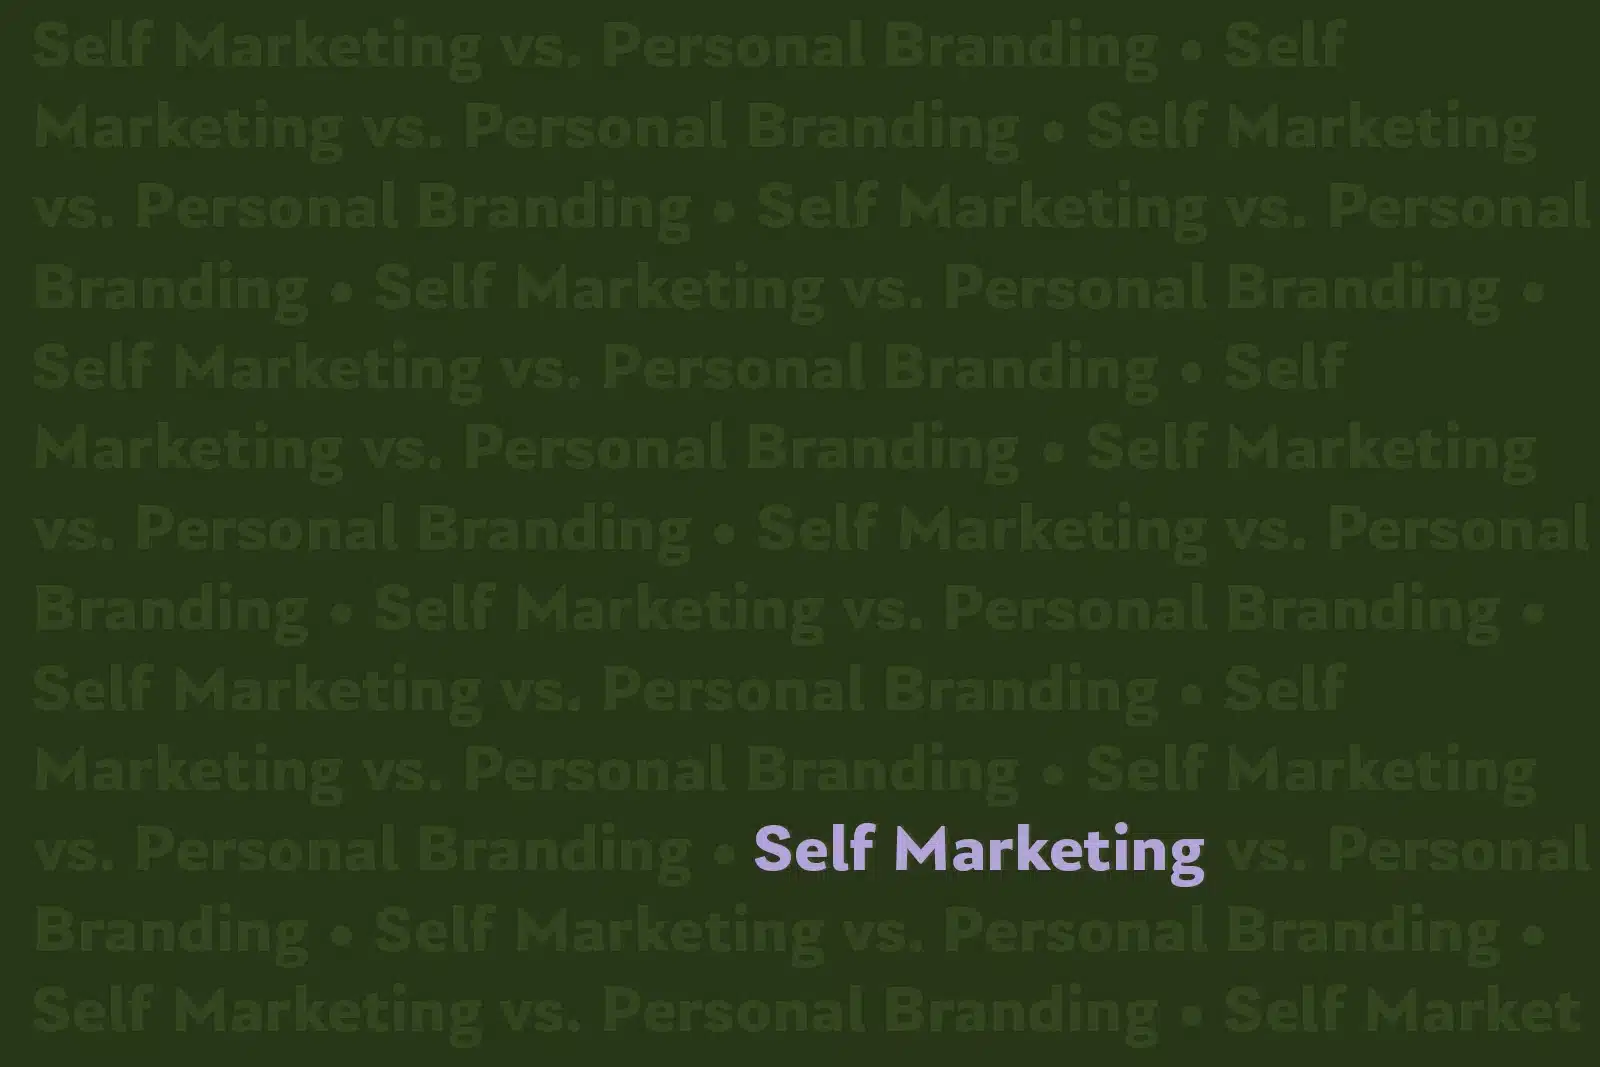 Text im Bild: Self Marketing vs. Personal Branding